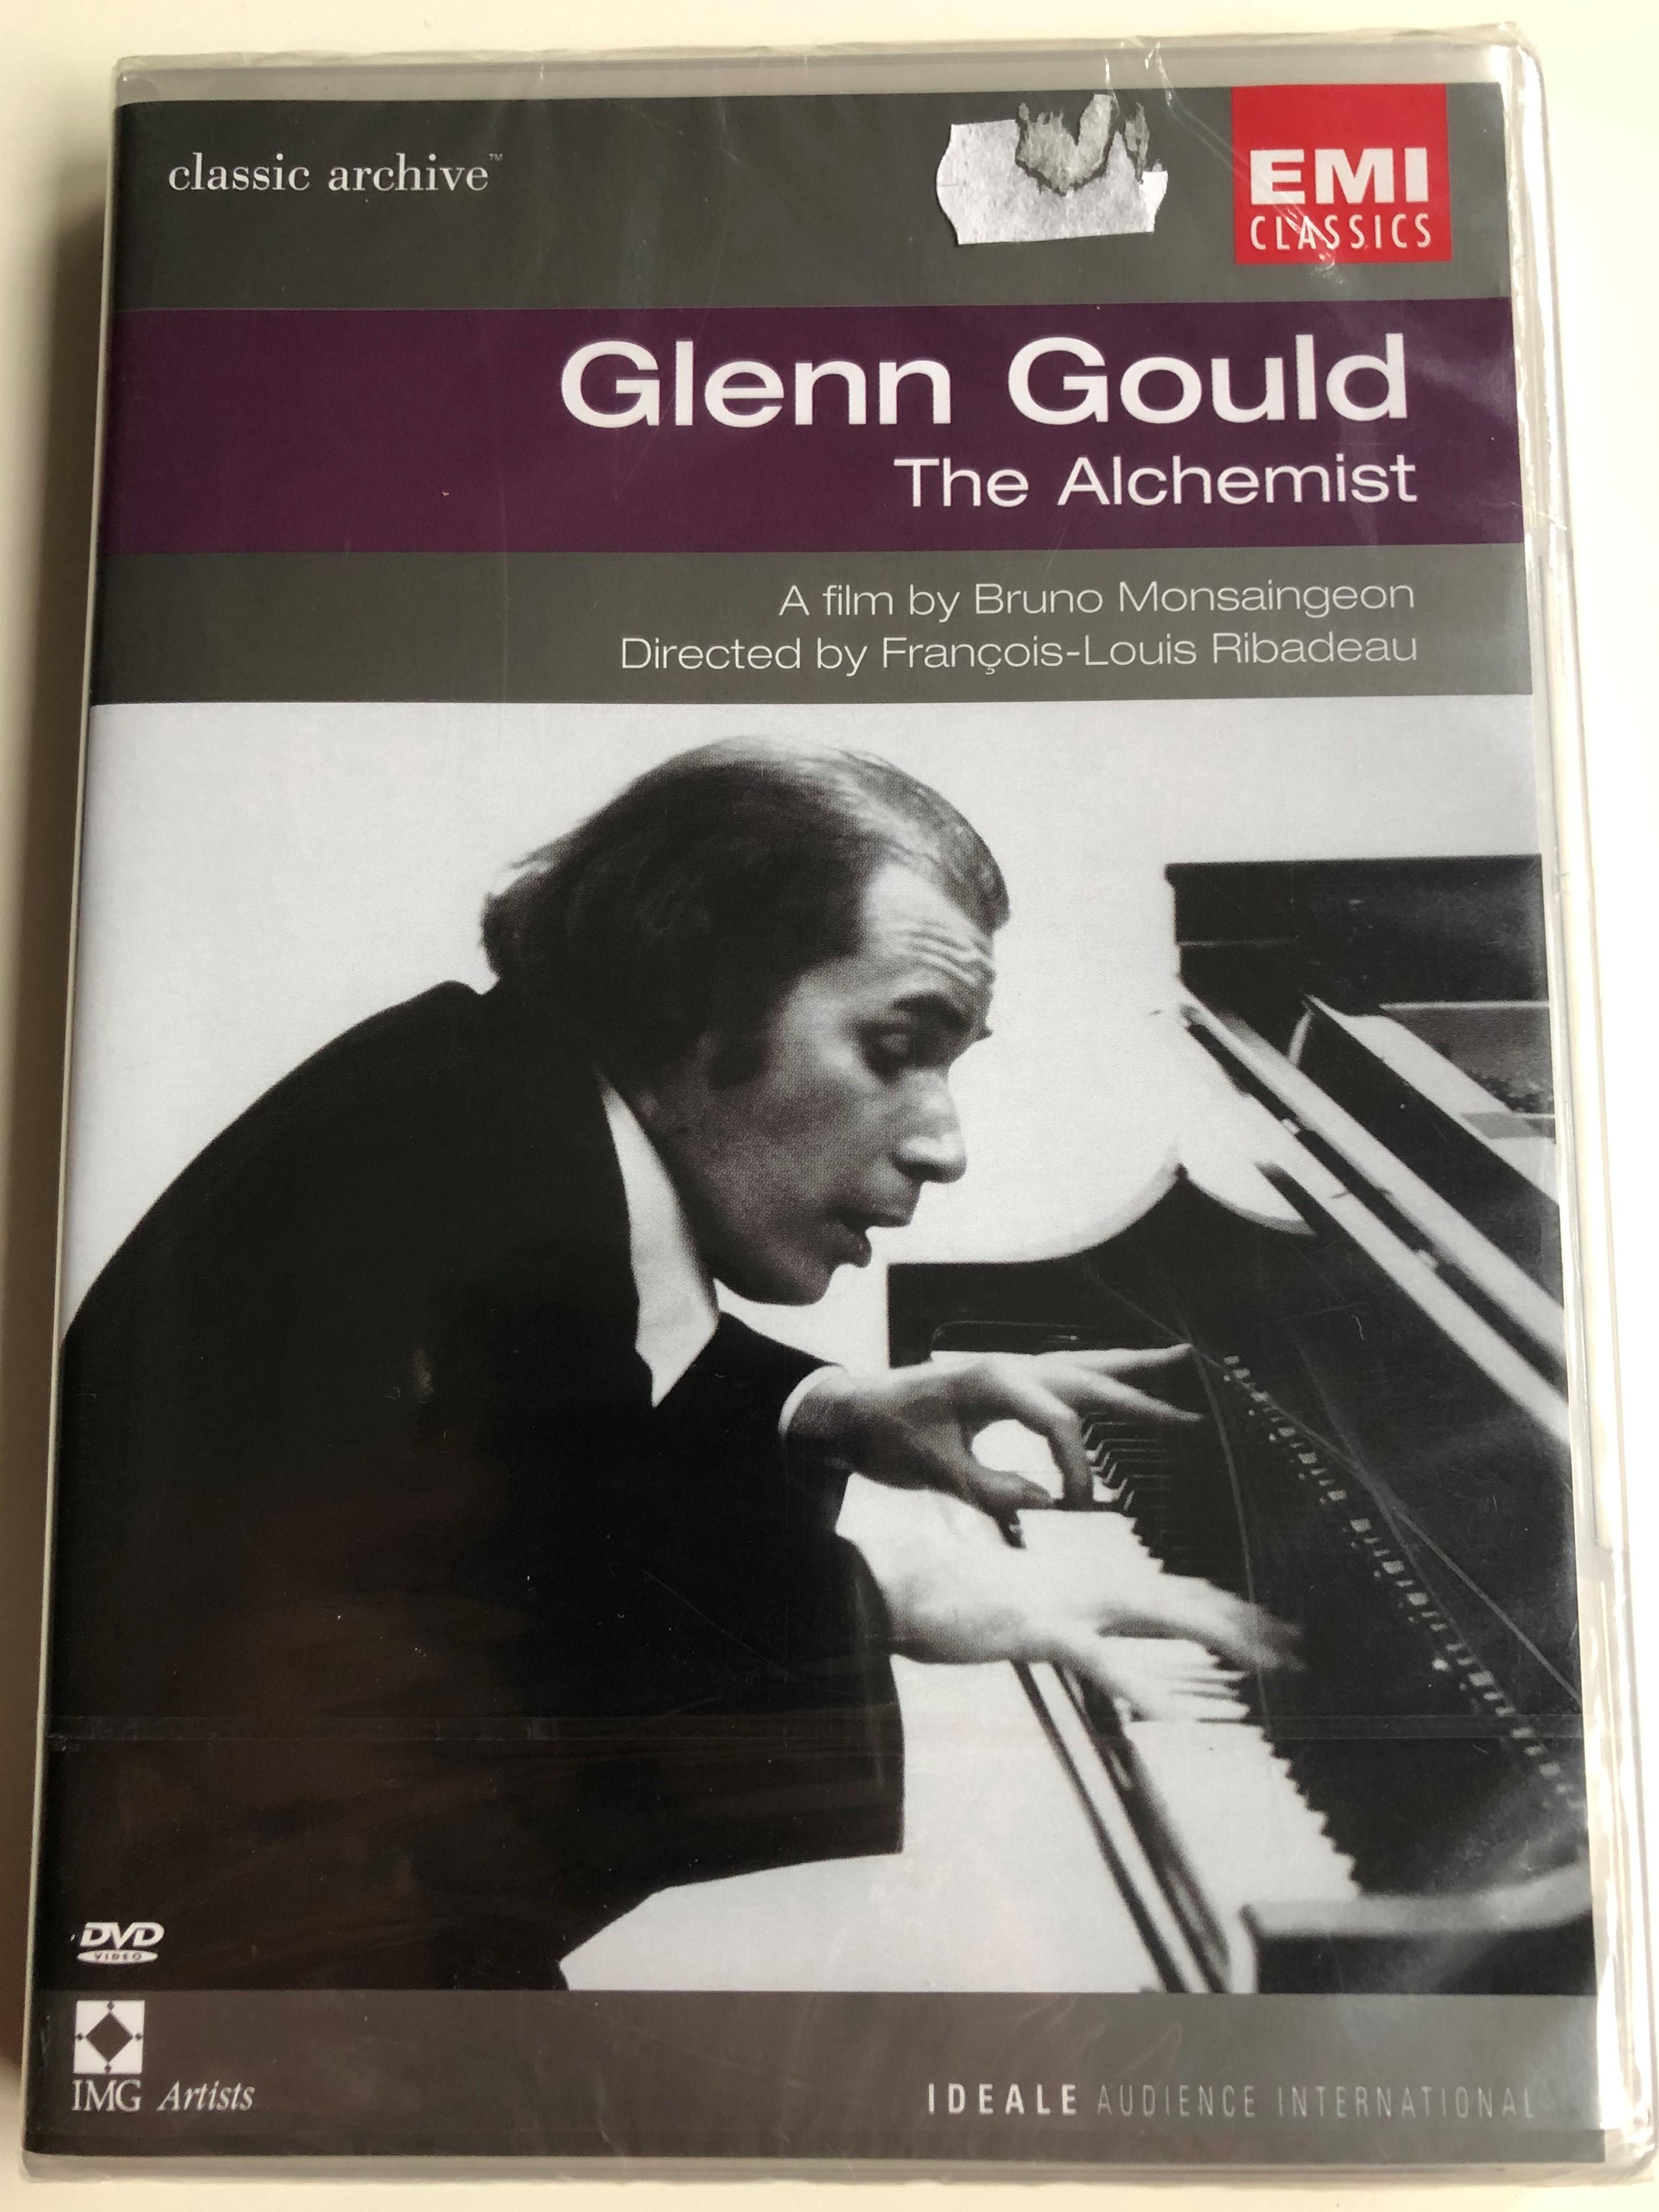 Glenn Gould - The Alchemist DVD A film by Bruno Monsaingeon / Directed by  Francois-Louis Ribadeau / Emi Classics Archive / Schoenberg suite Op. 25,  Byrd Galliard No.6, Berg - Sonata Op.1 / Filmed in Montreal -  bibleinmylanguage